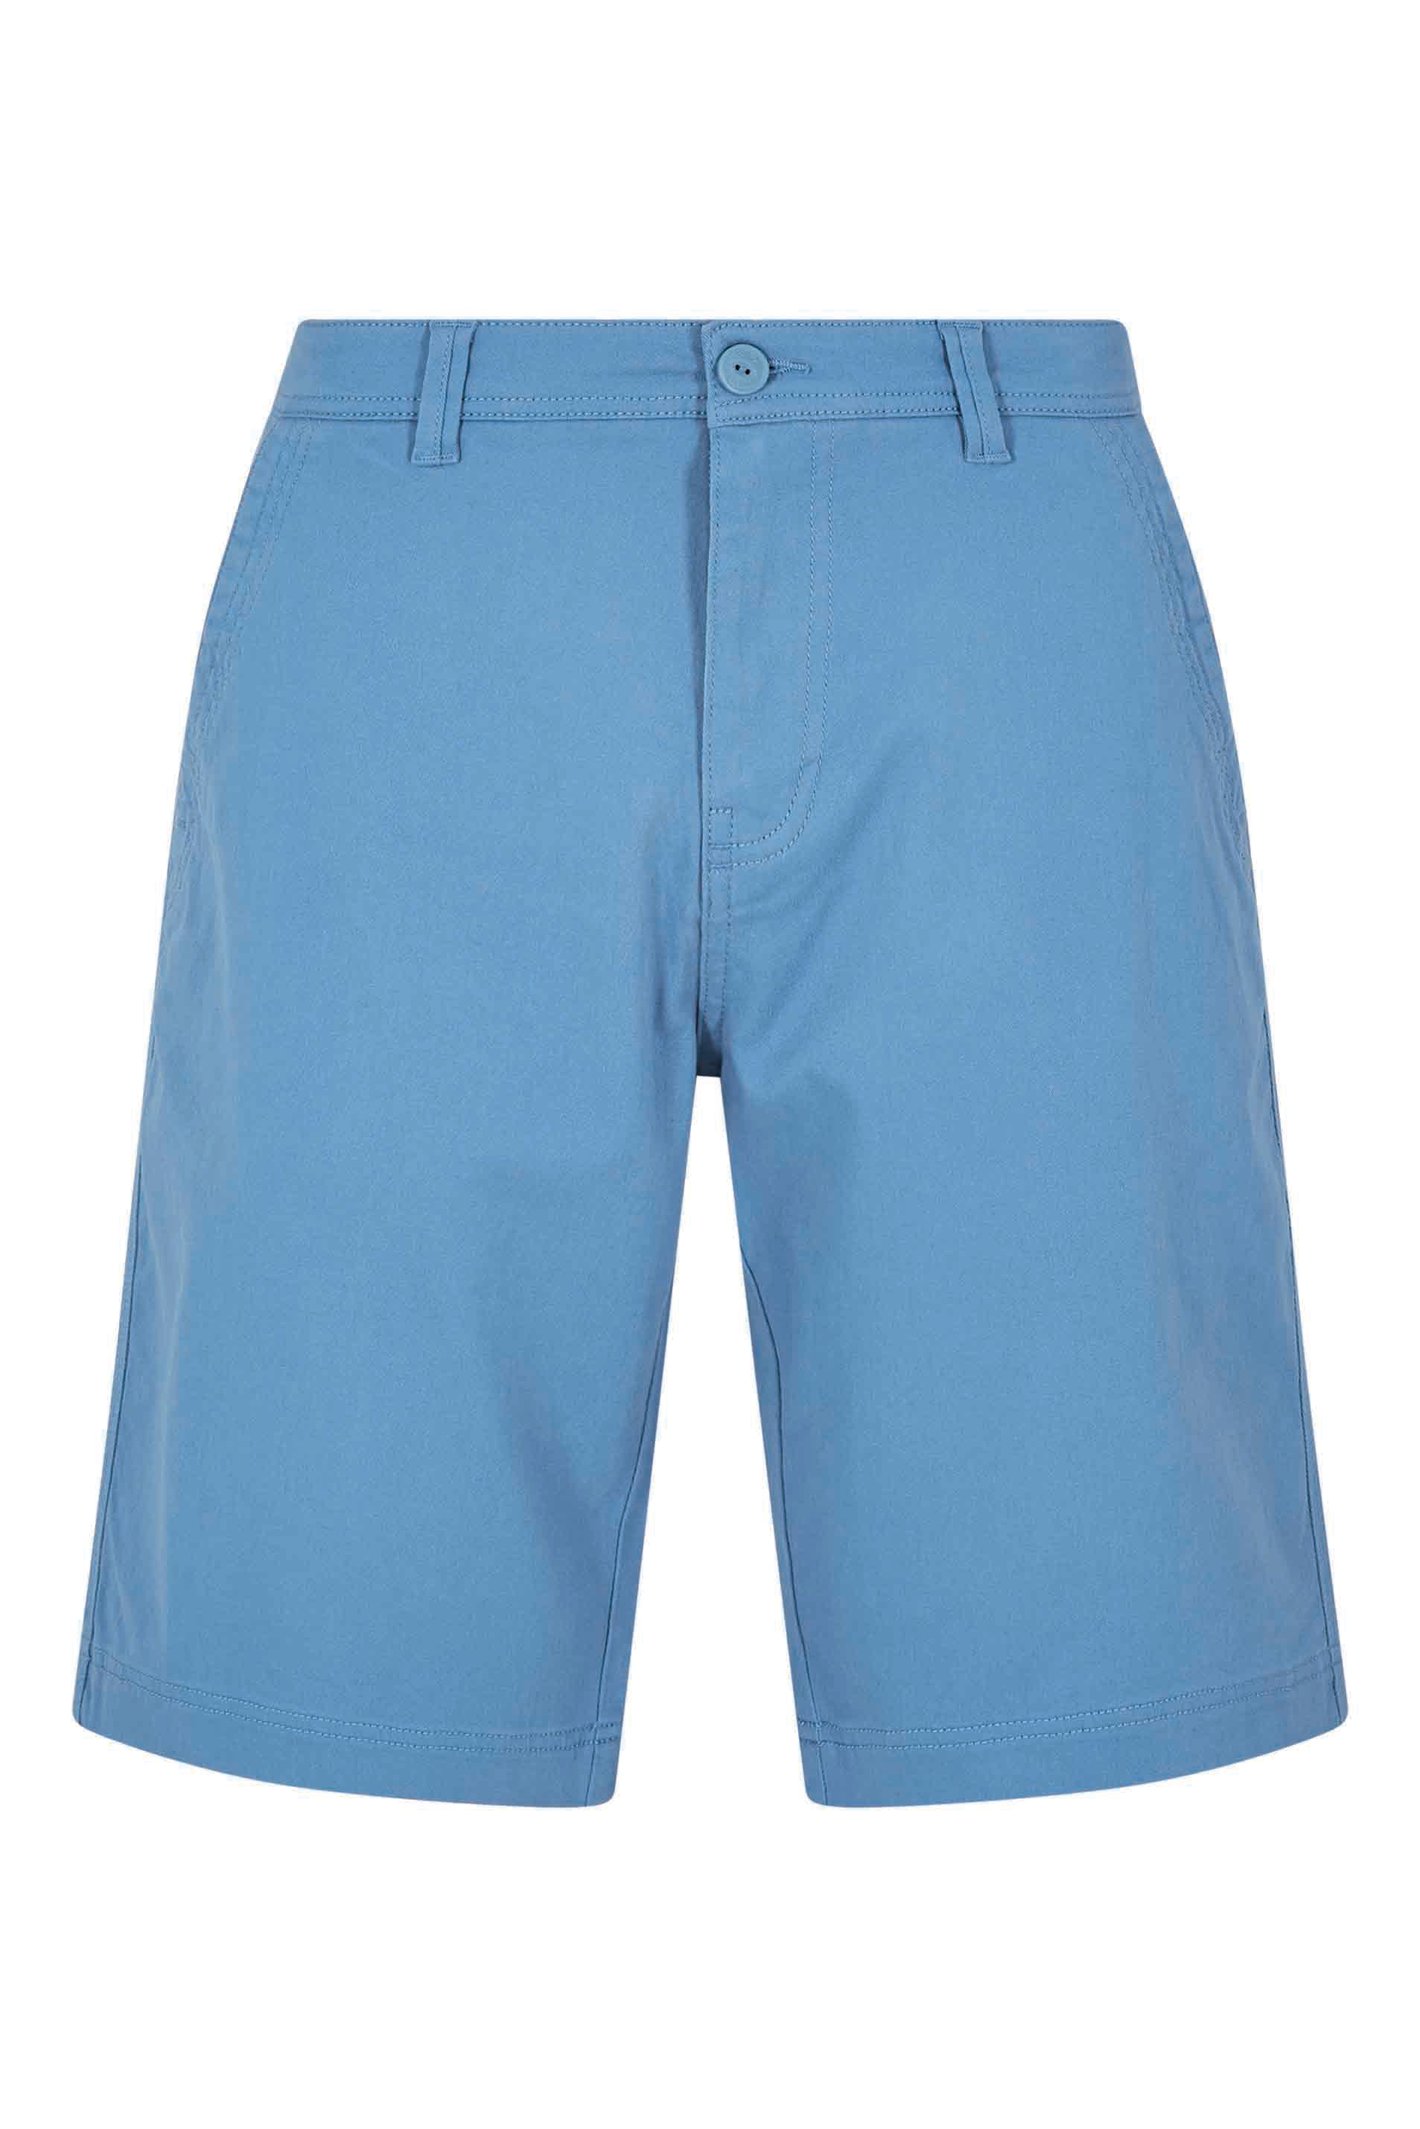 Weird Fish Rayburn Flat Front Shorts Blue Sapphire Size 34